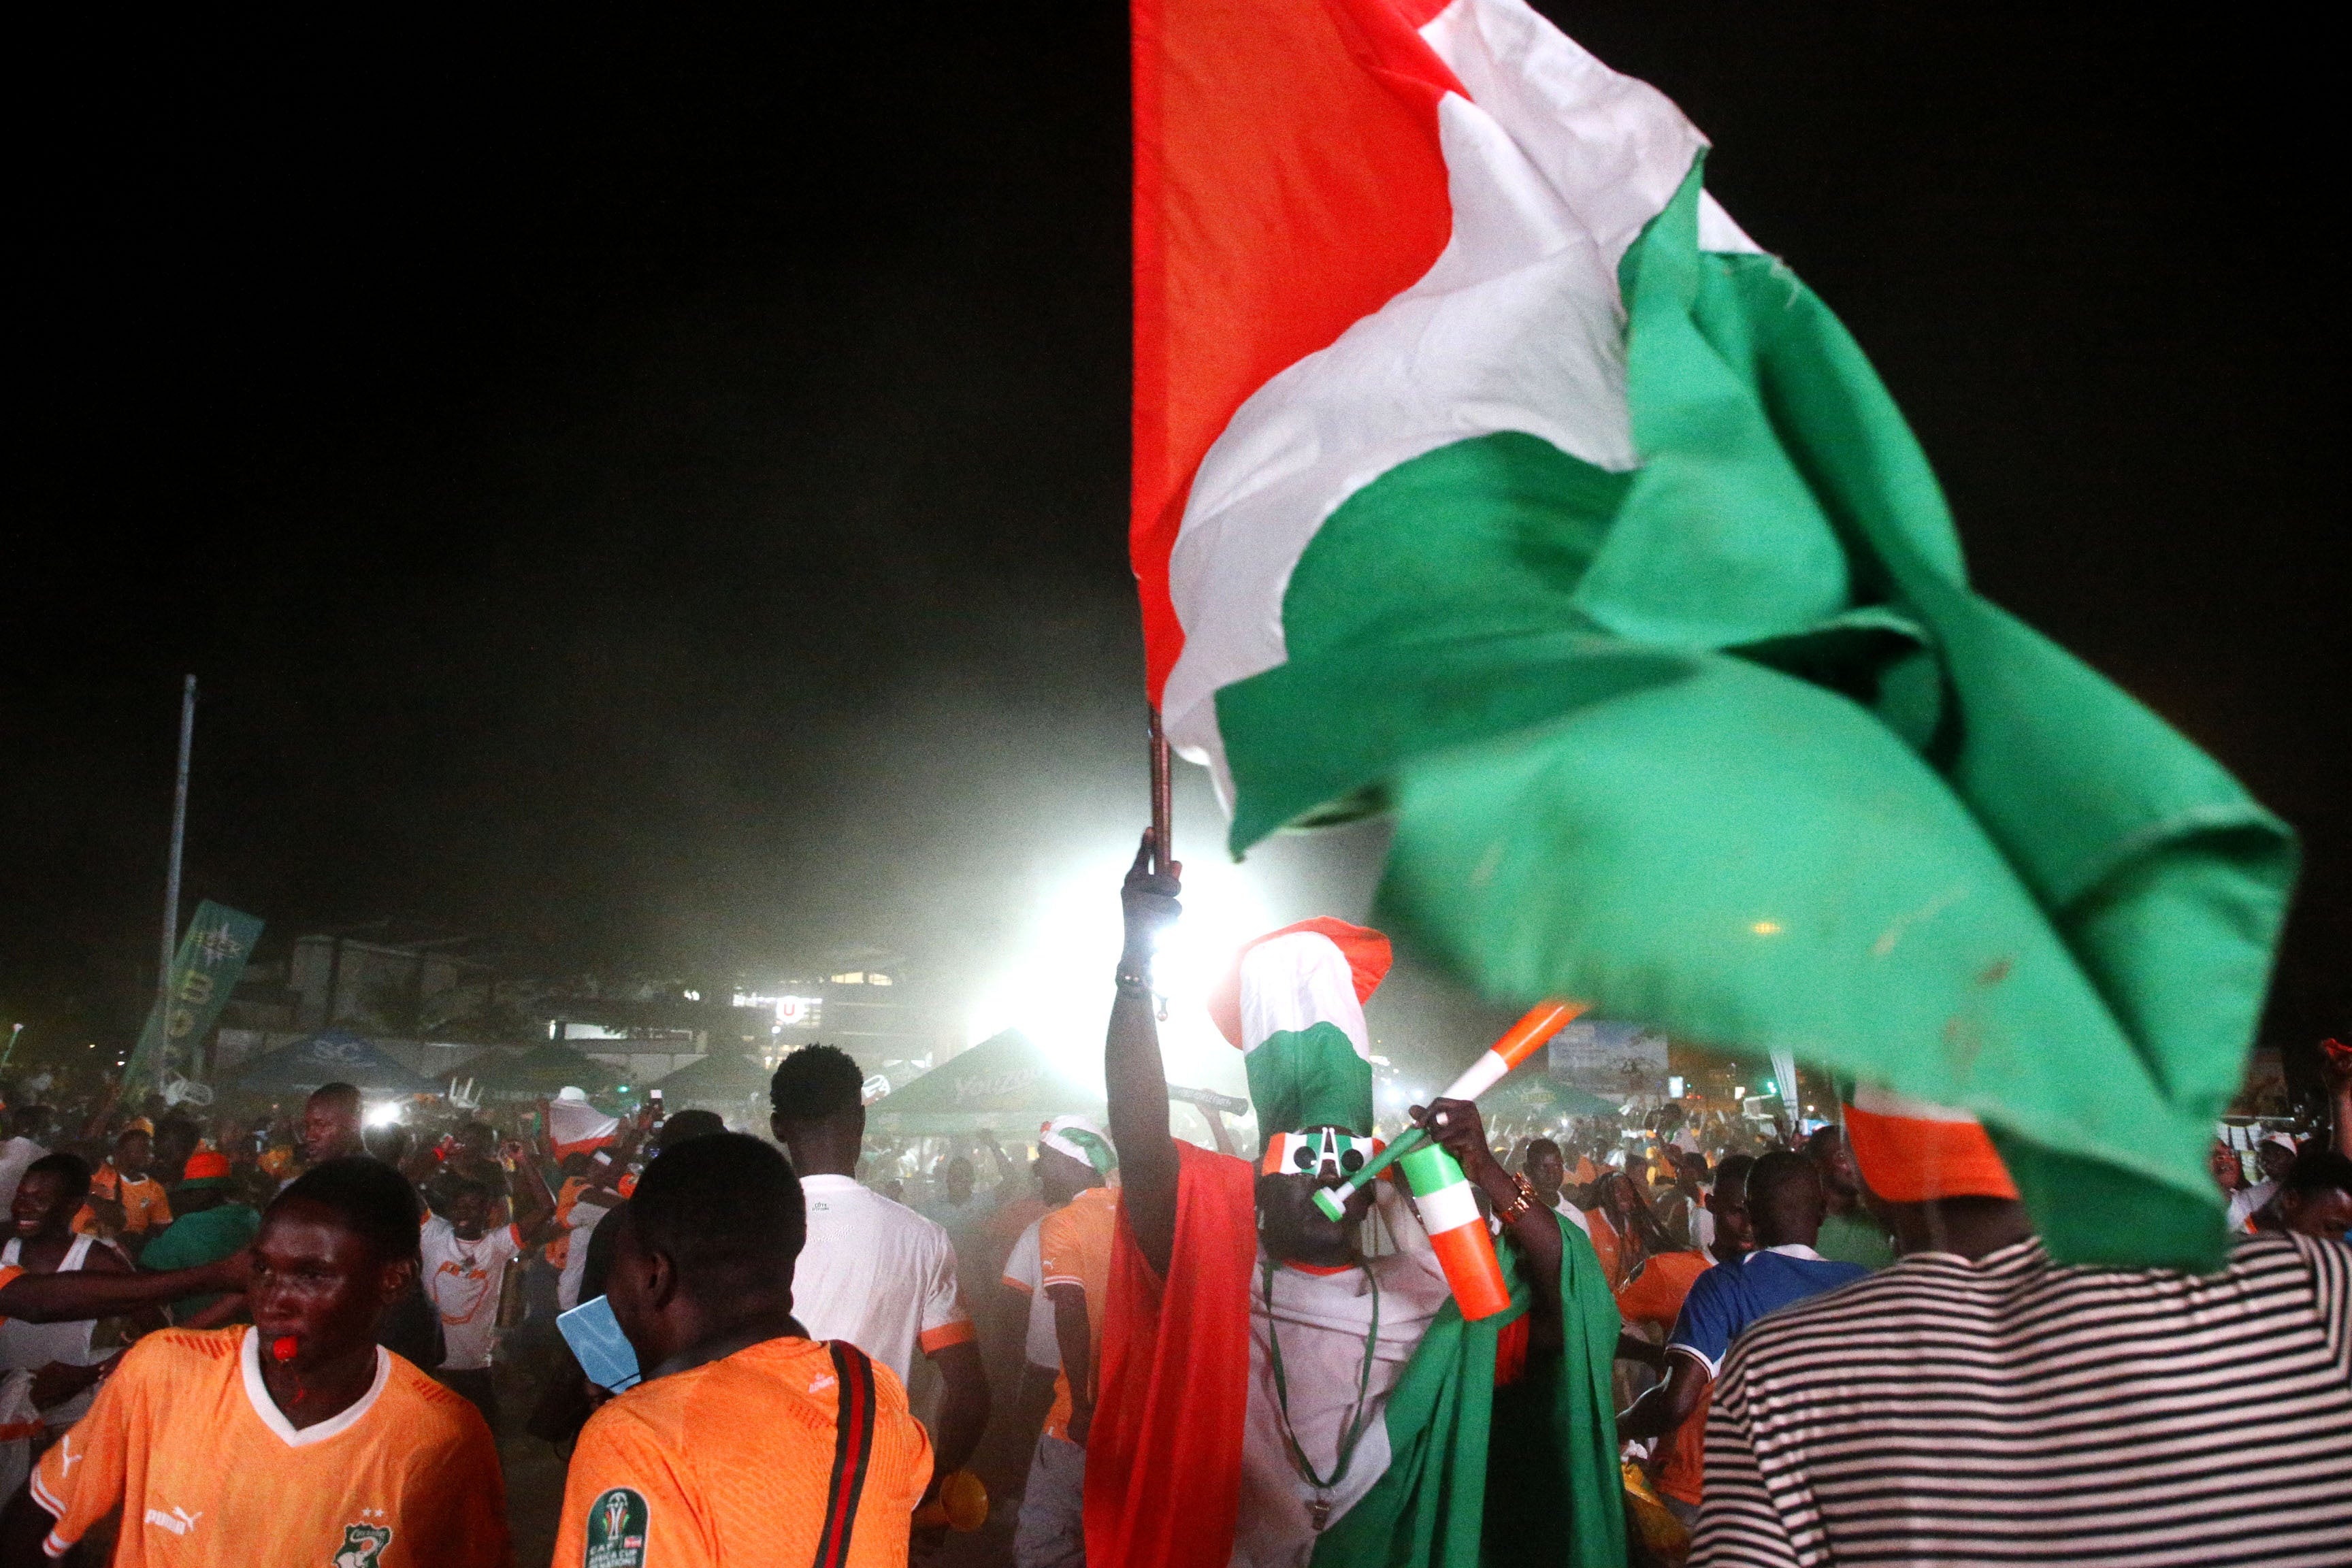 Ivory Coast fans celebrate reaching the semis